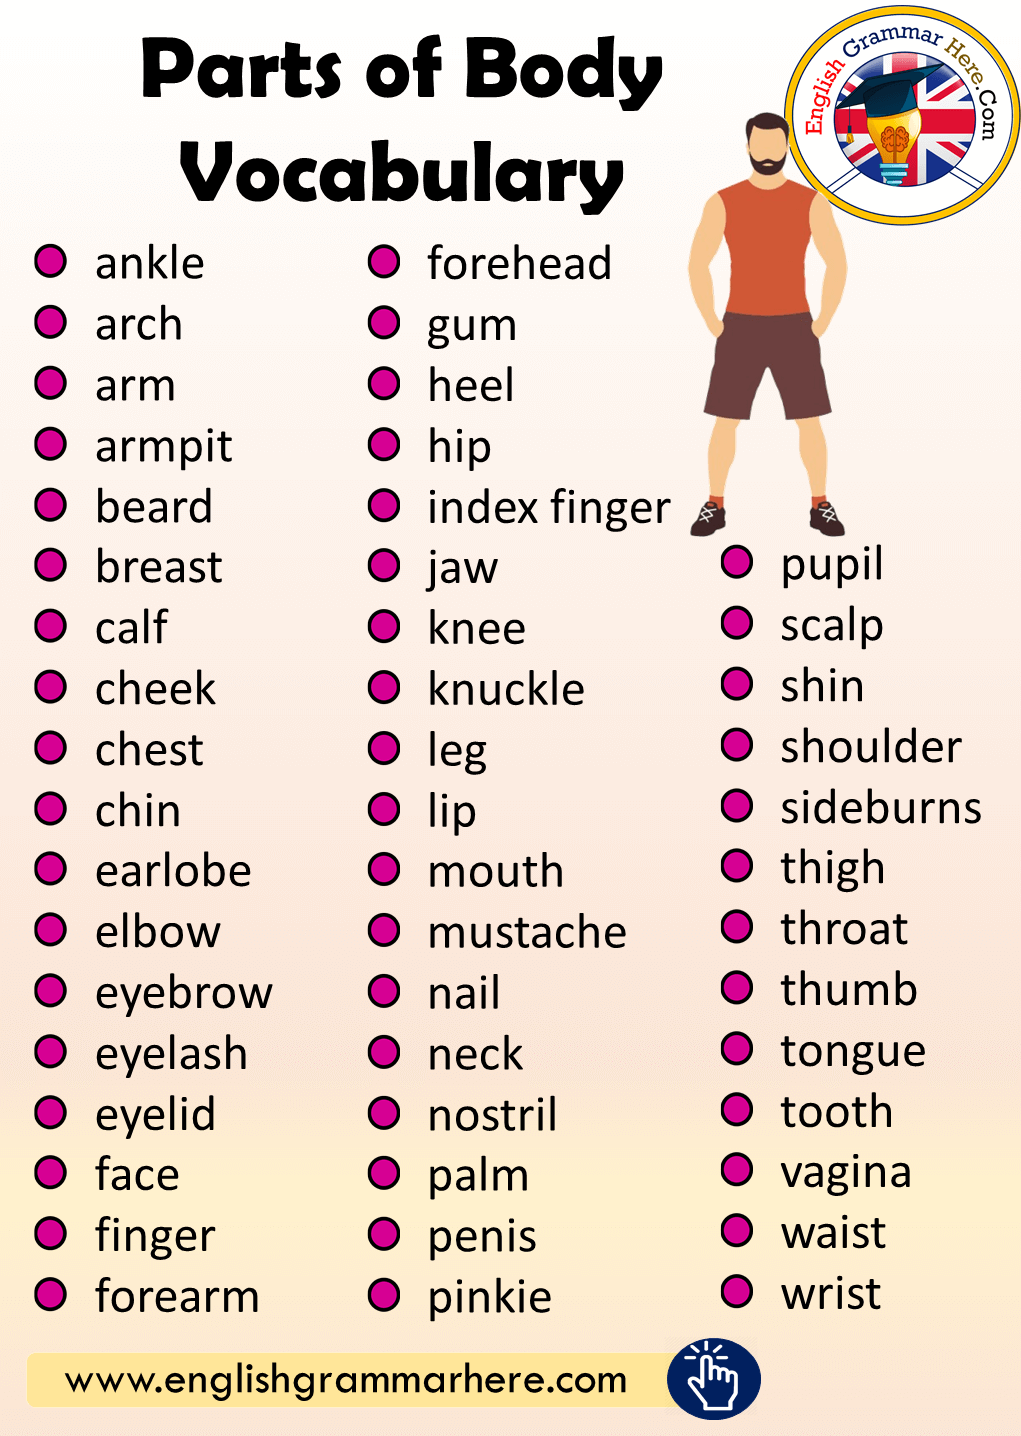 English Parts of Body Vocabulary List